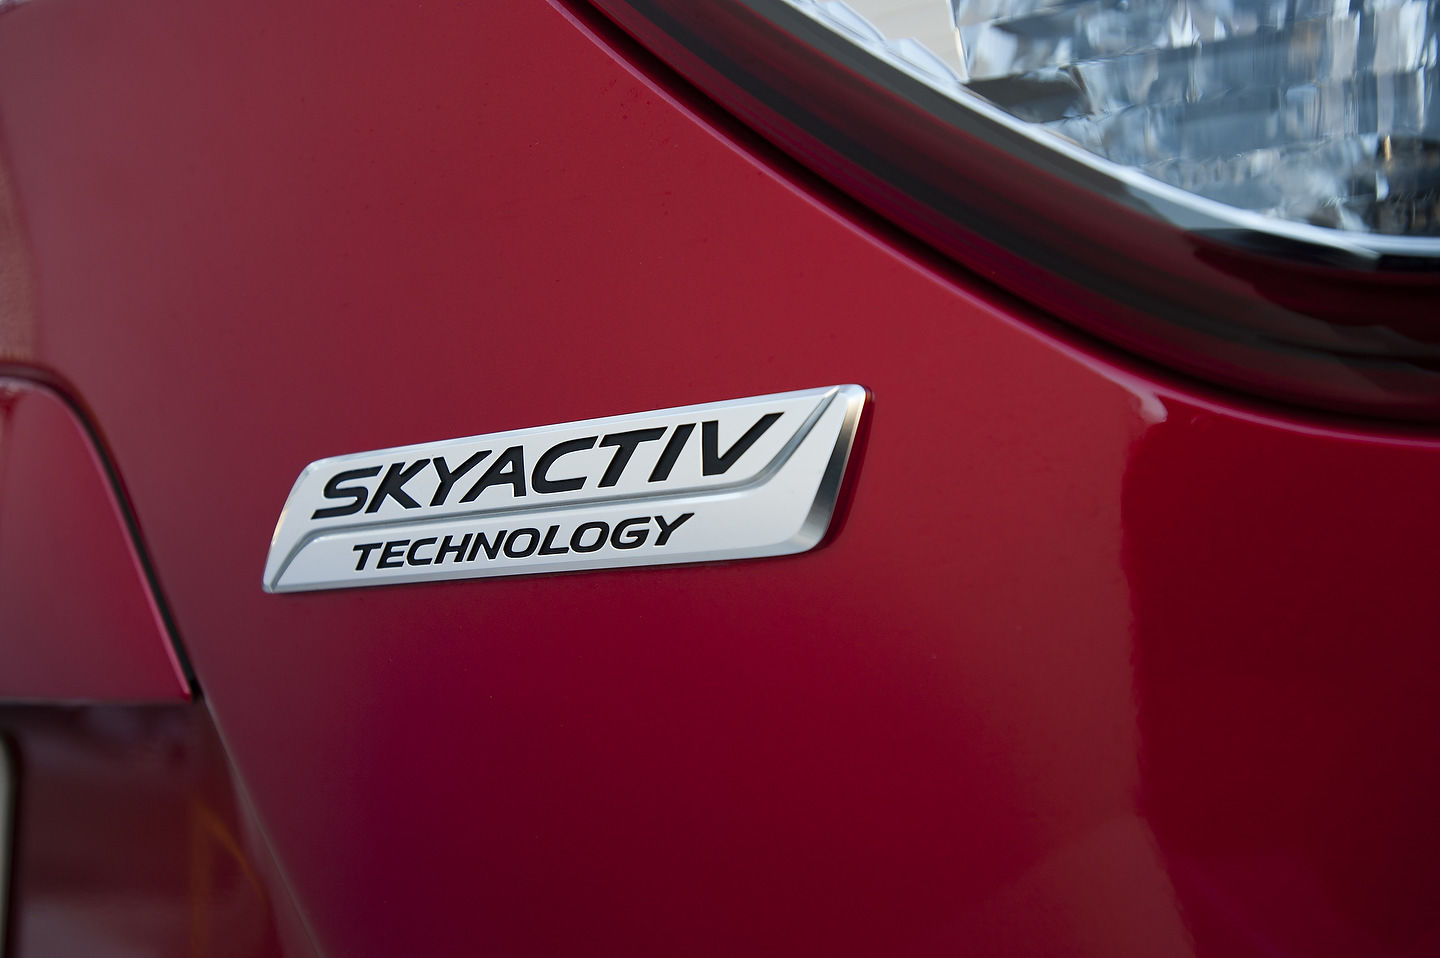 Understanding Skyactiv Technology